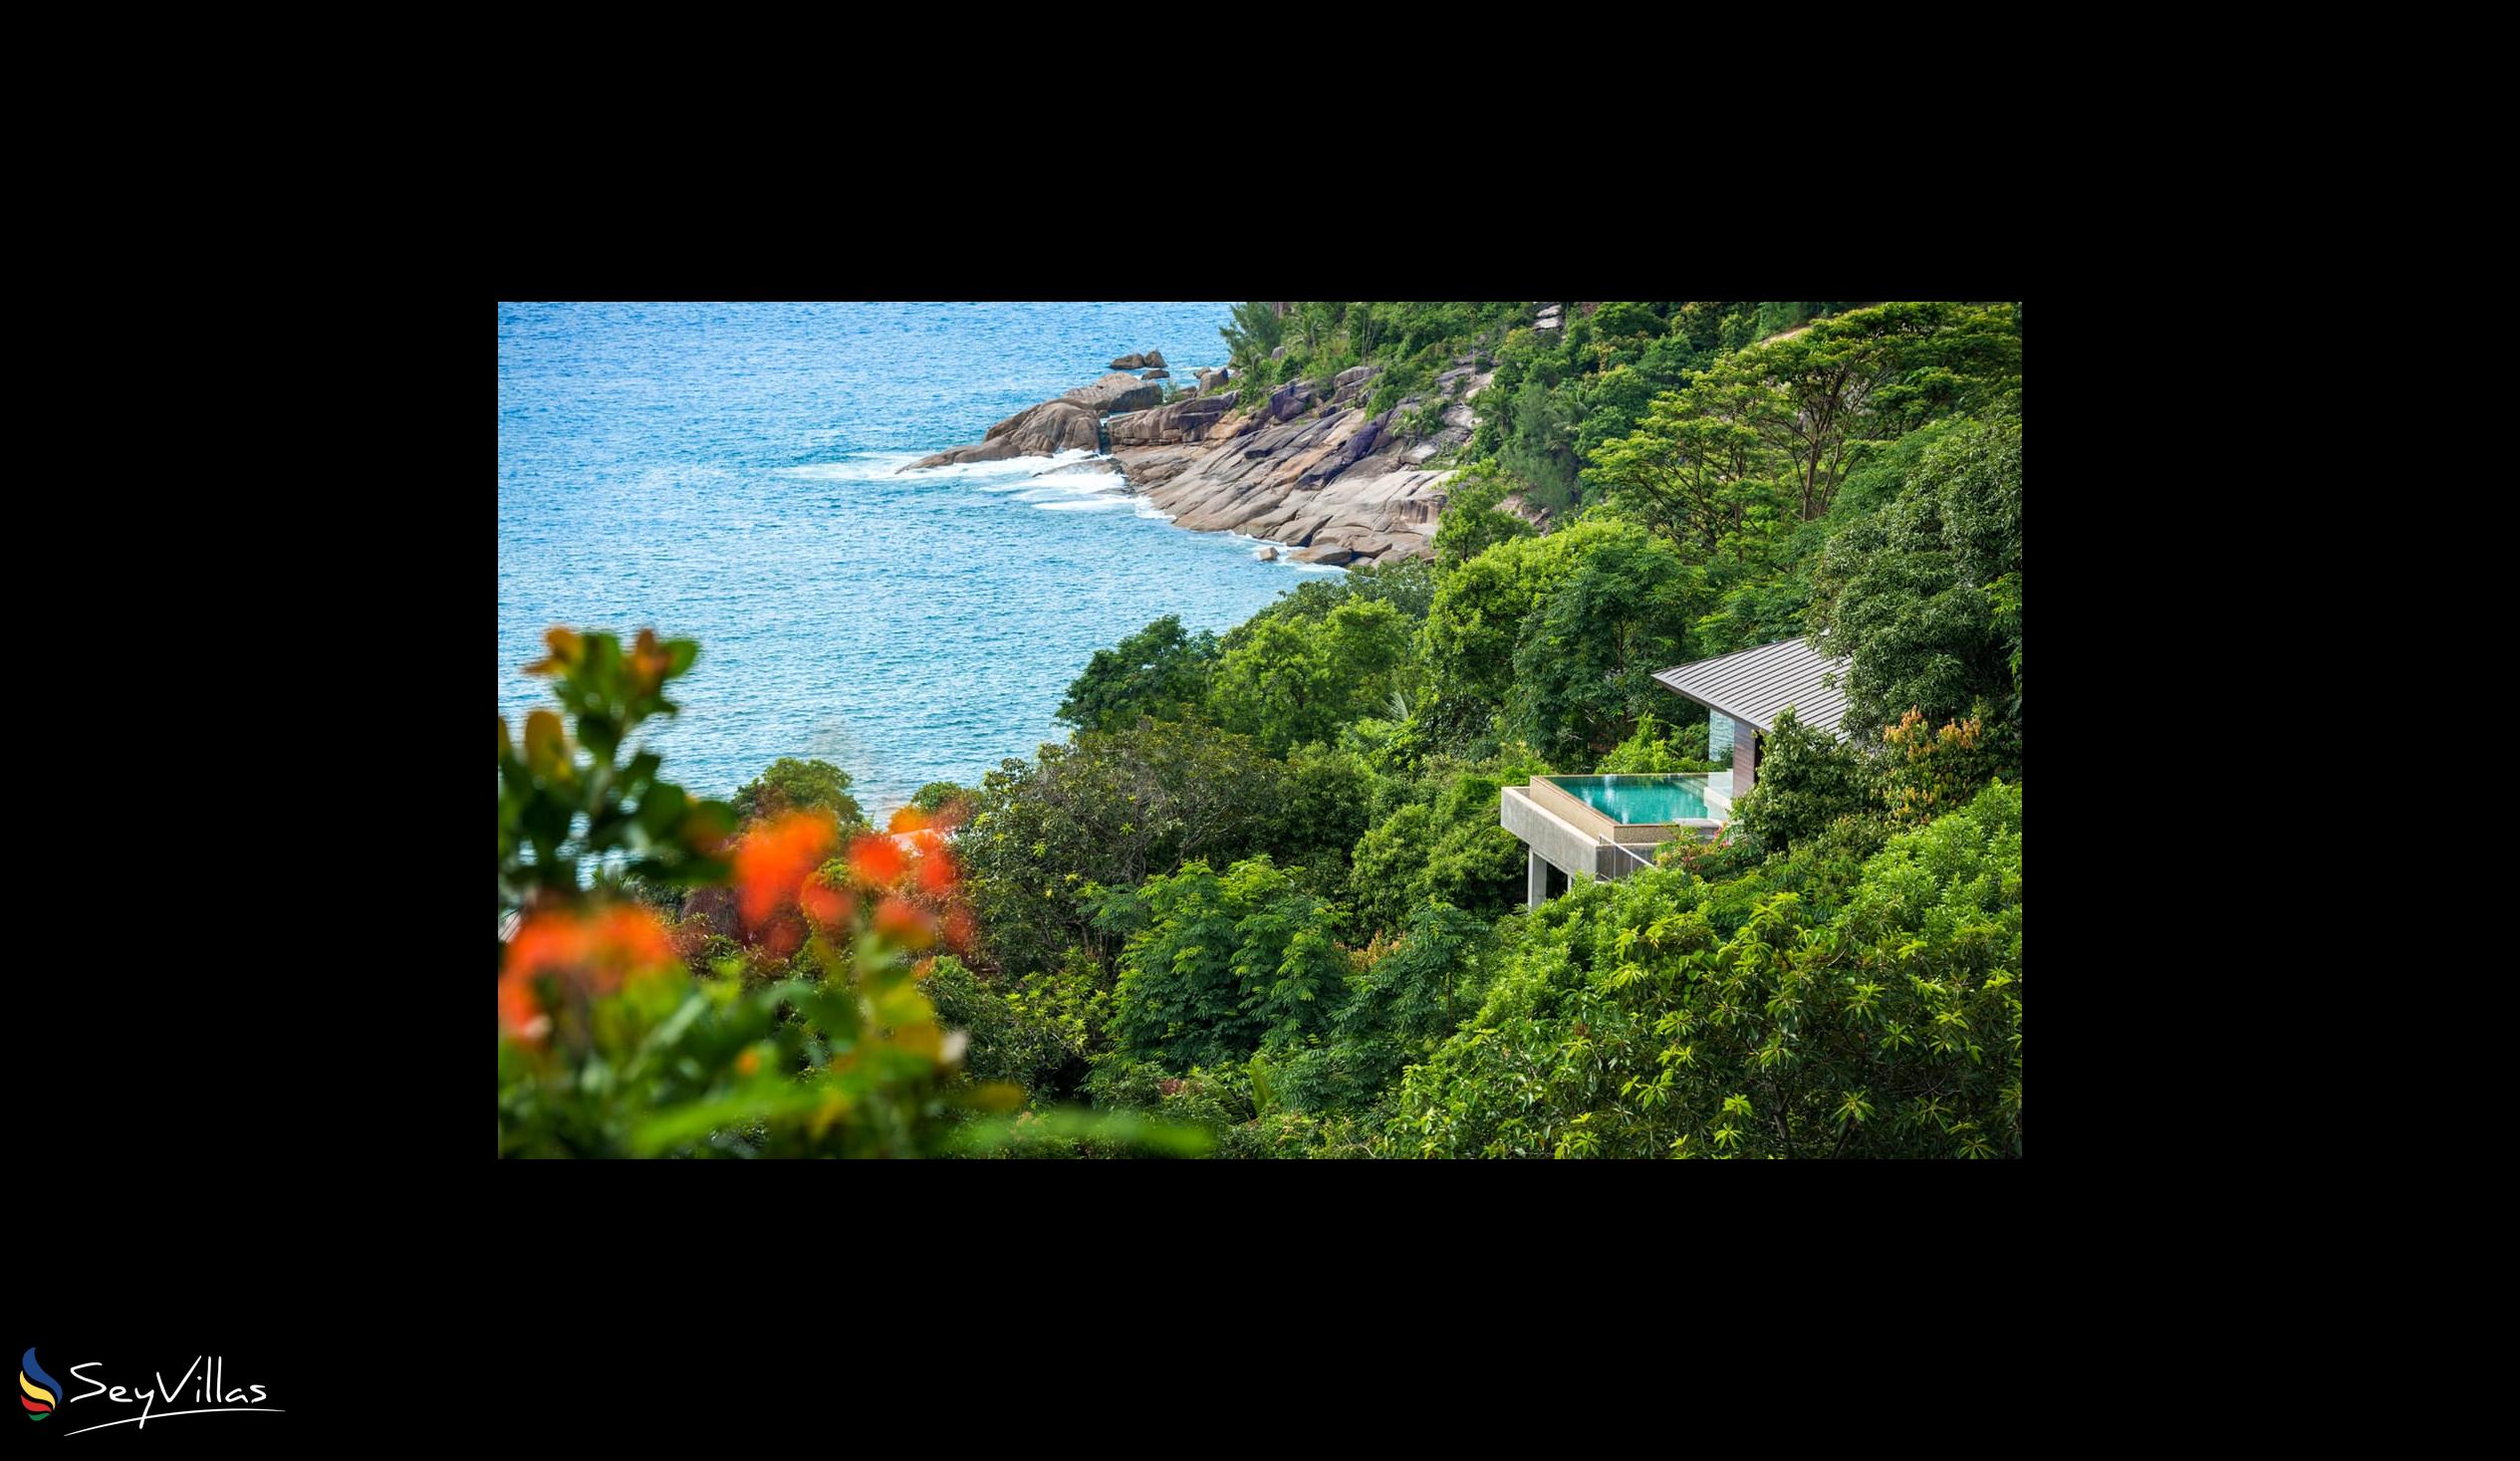 Foto 41: Four Seasons Resort - Hilltop Ocean View Villa - Mahé (Seychellen)